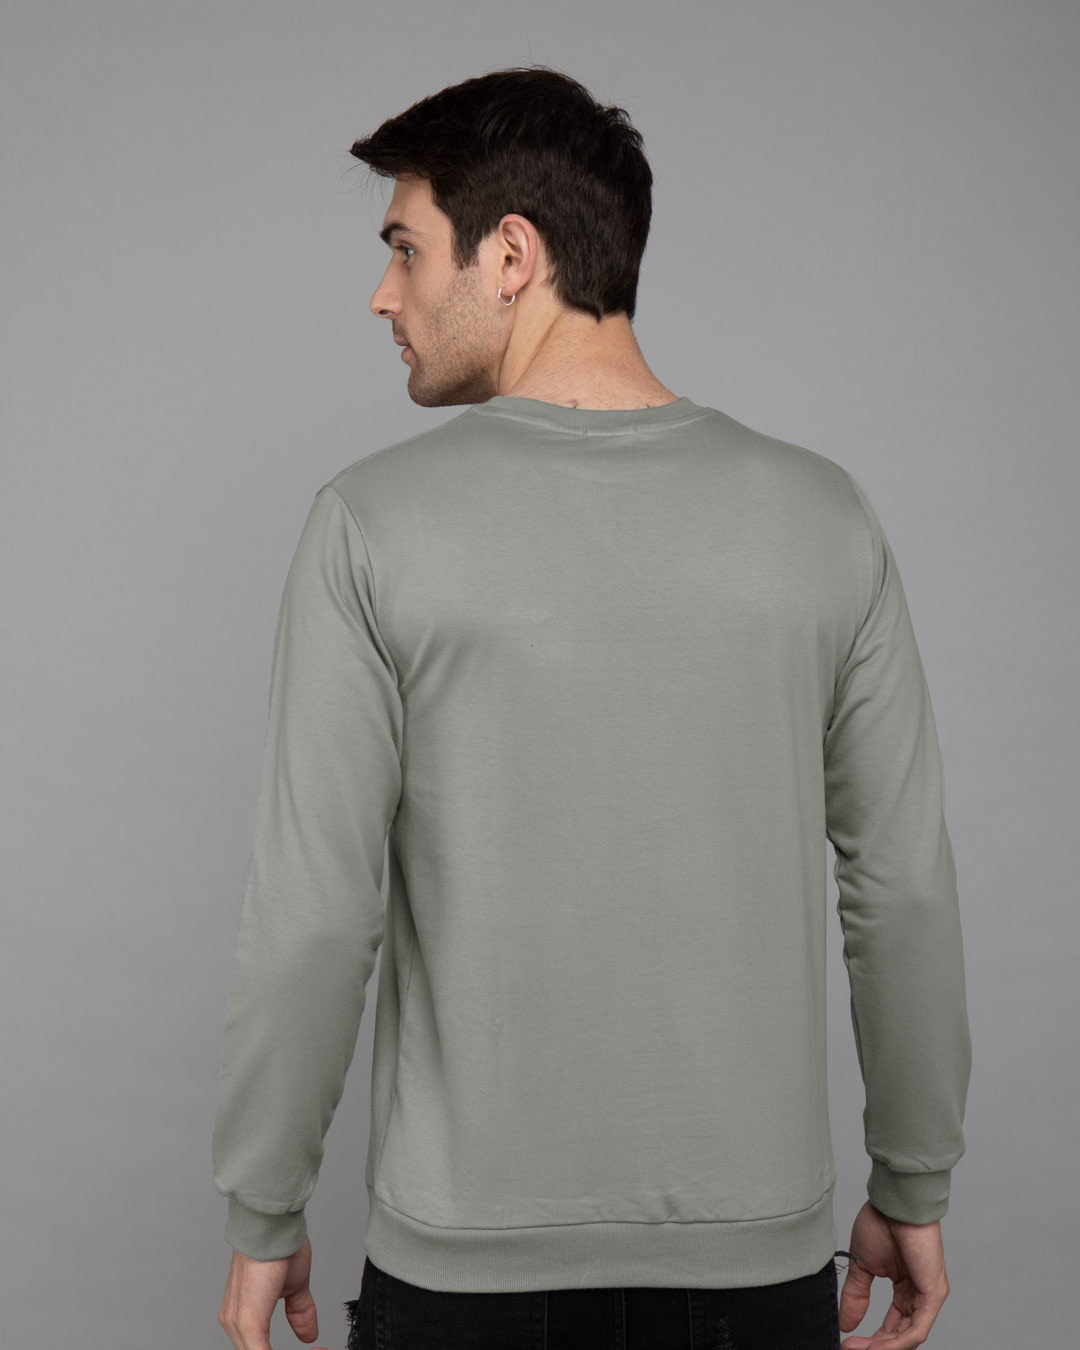 Shop Hogwarts Crest Printed Fleece Light Sweatshirt (HPL)-Back